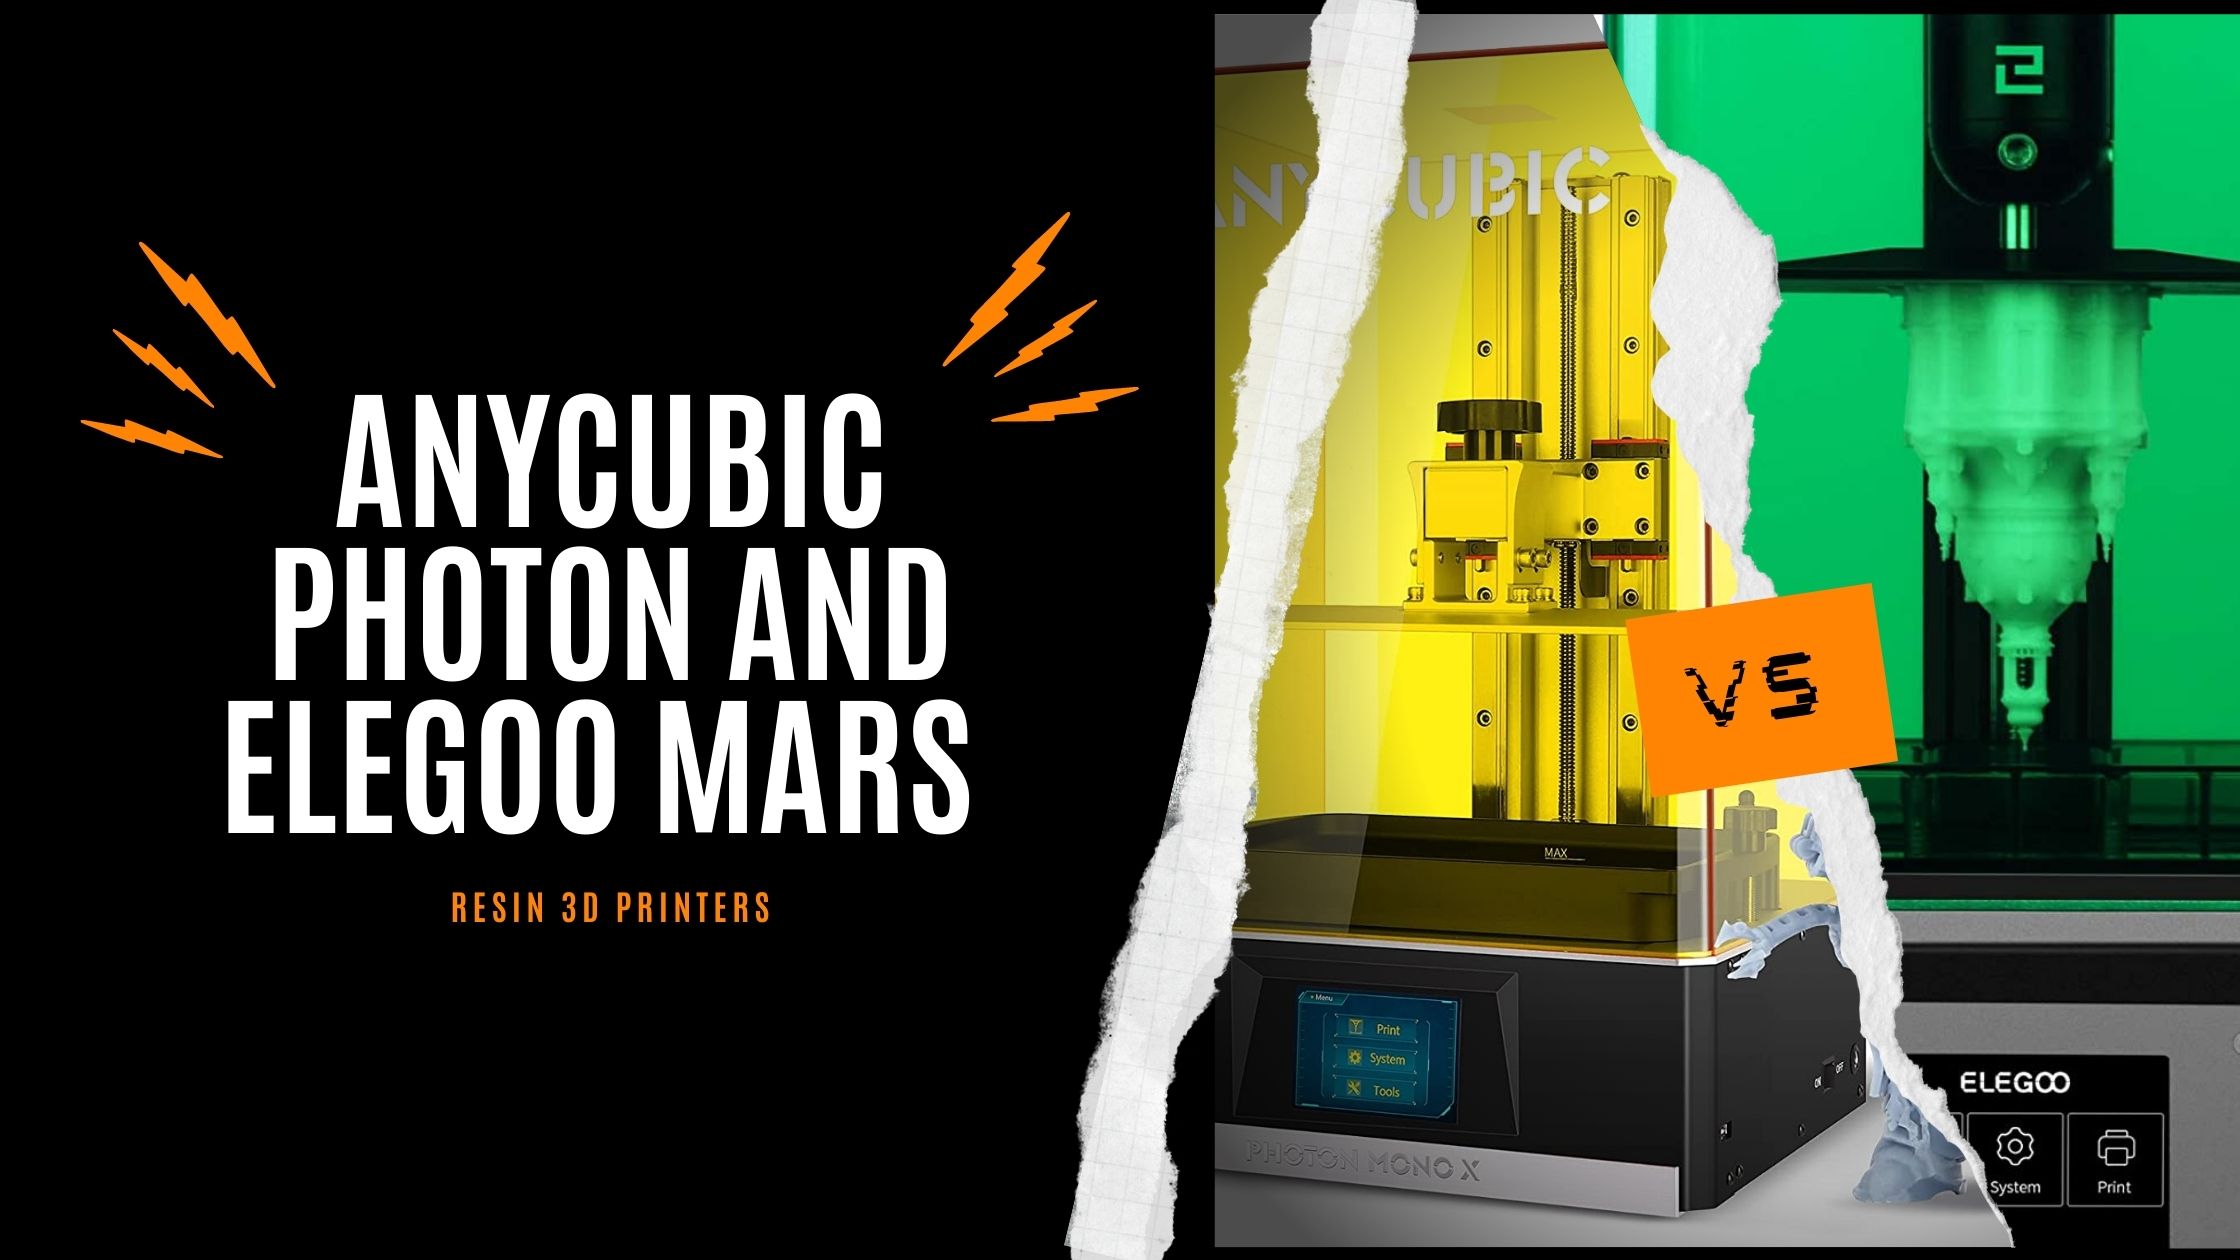 Elegoo Mars vs Anycubic photon